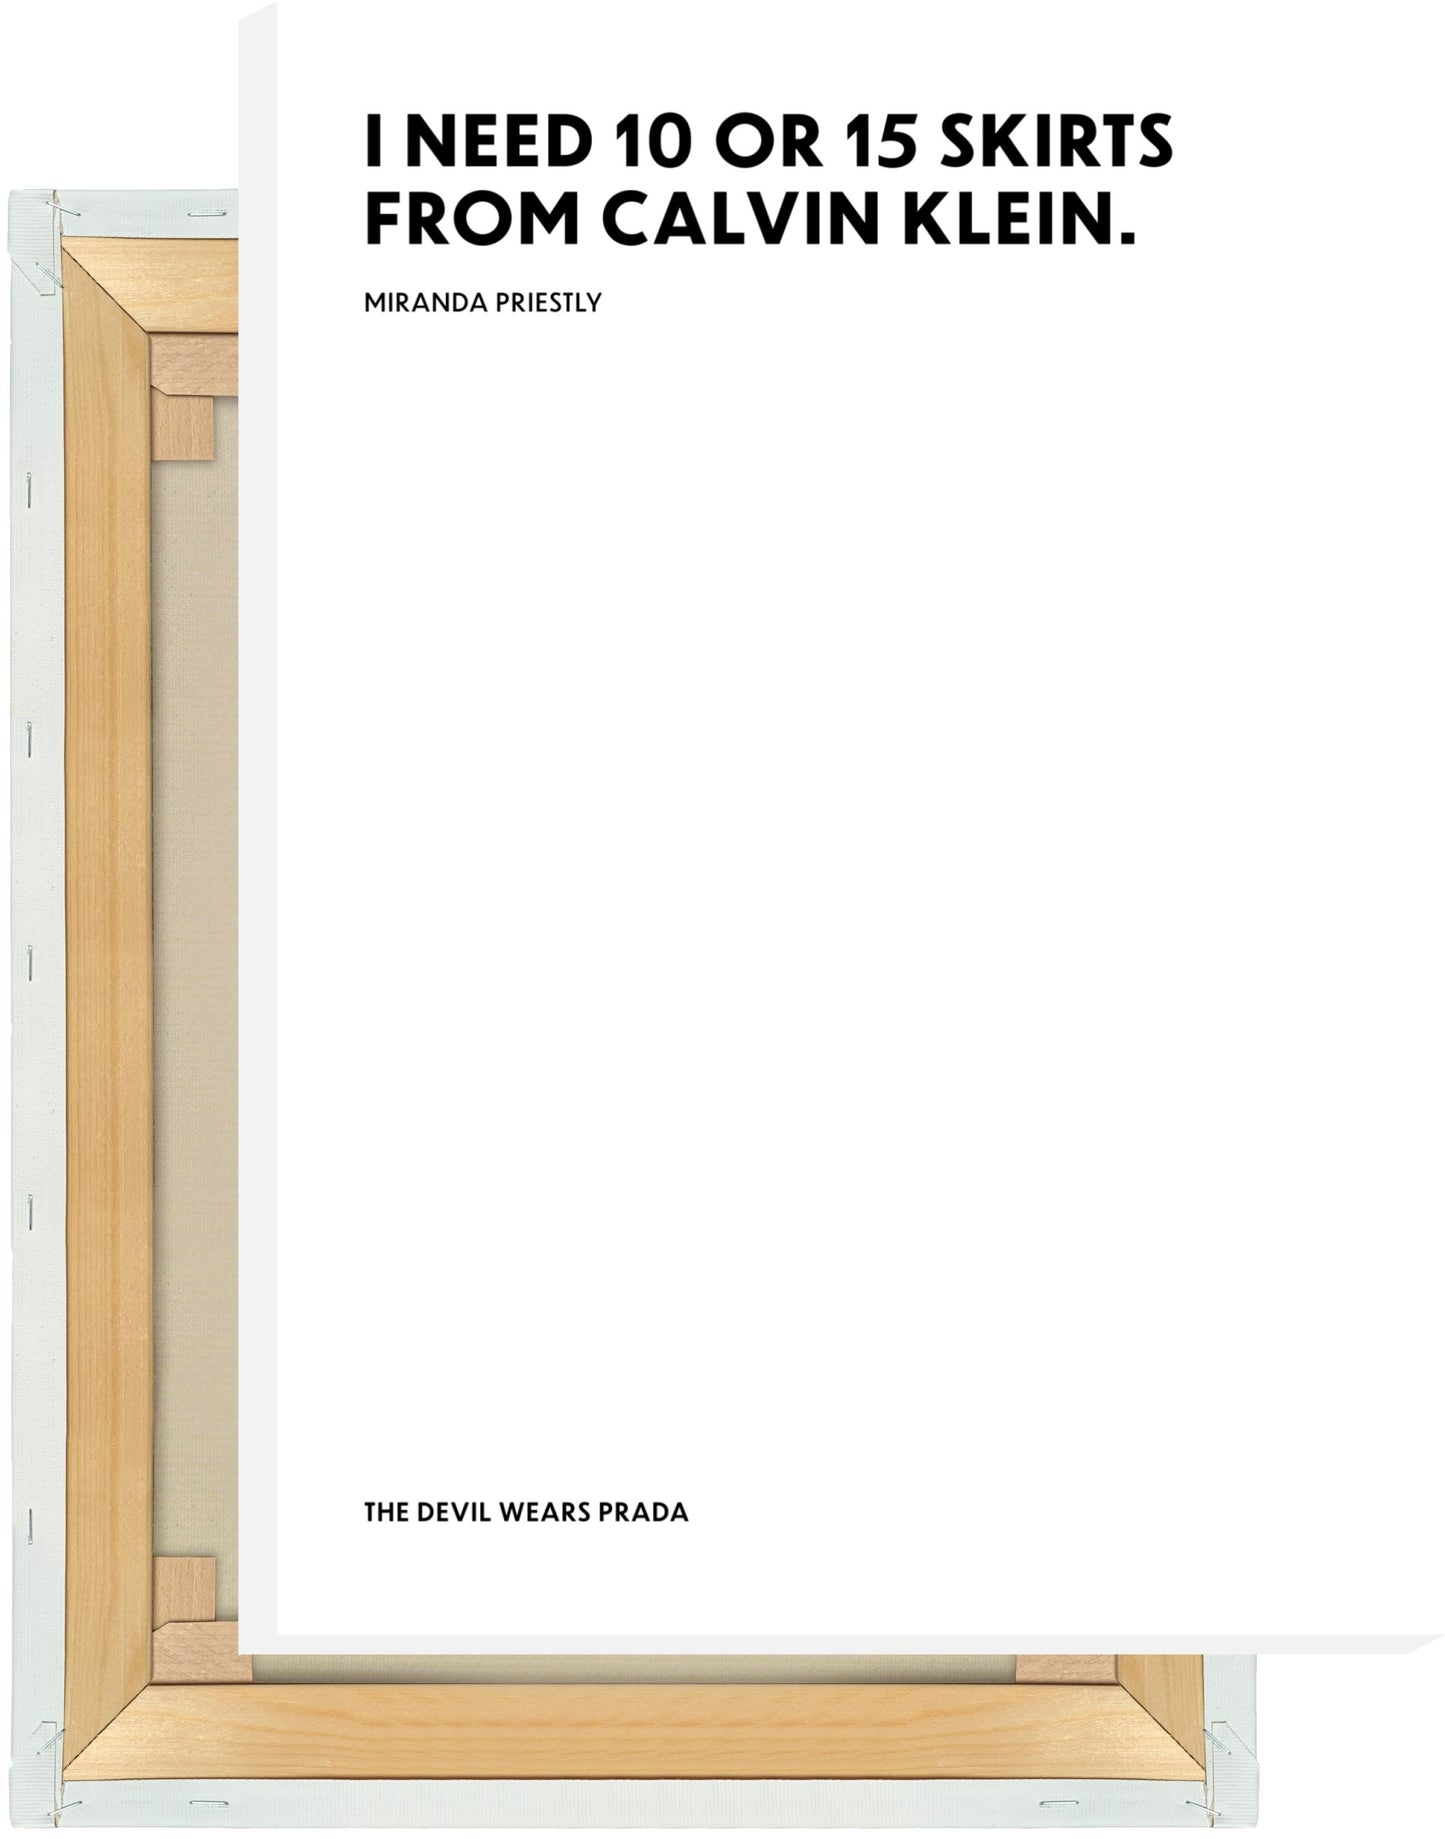 Leinwand I need 10 or 15 skirts from Calvin Klein. - Miranda Priestly - The Devil Wears Prada (Der Teufel trägt Prada)